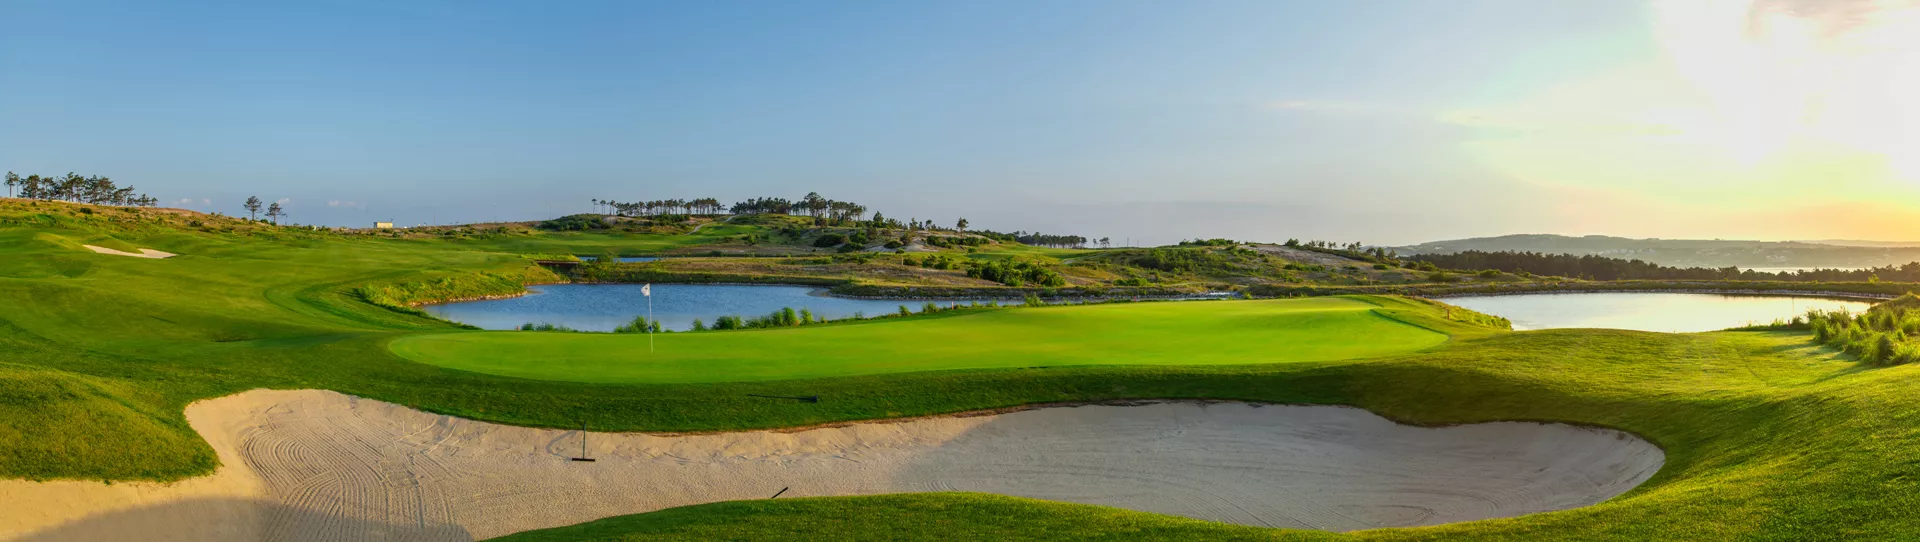 Portugal golf courses - Royal Obidos - Photo 2